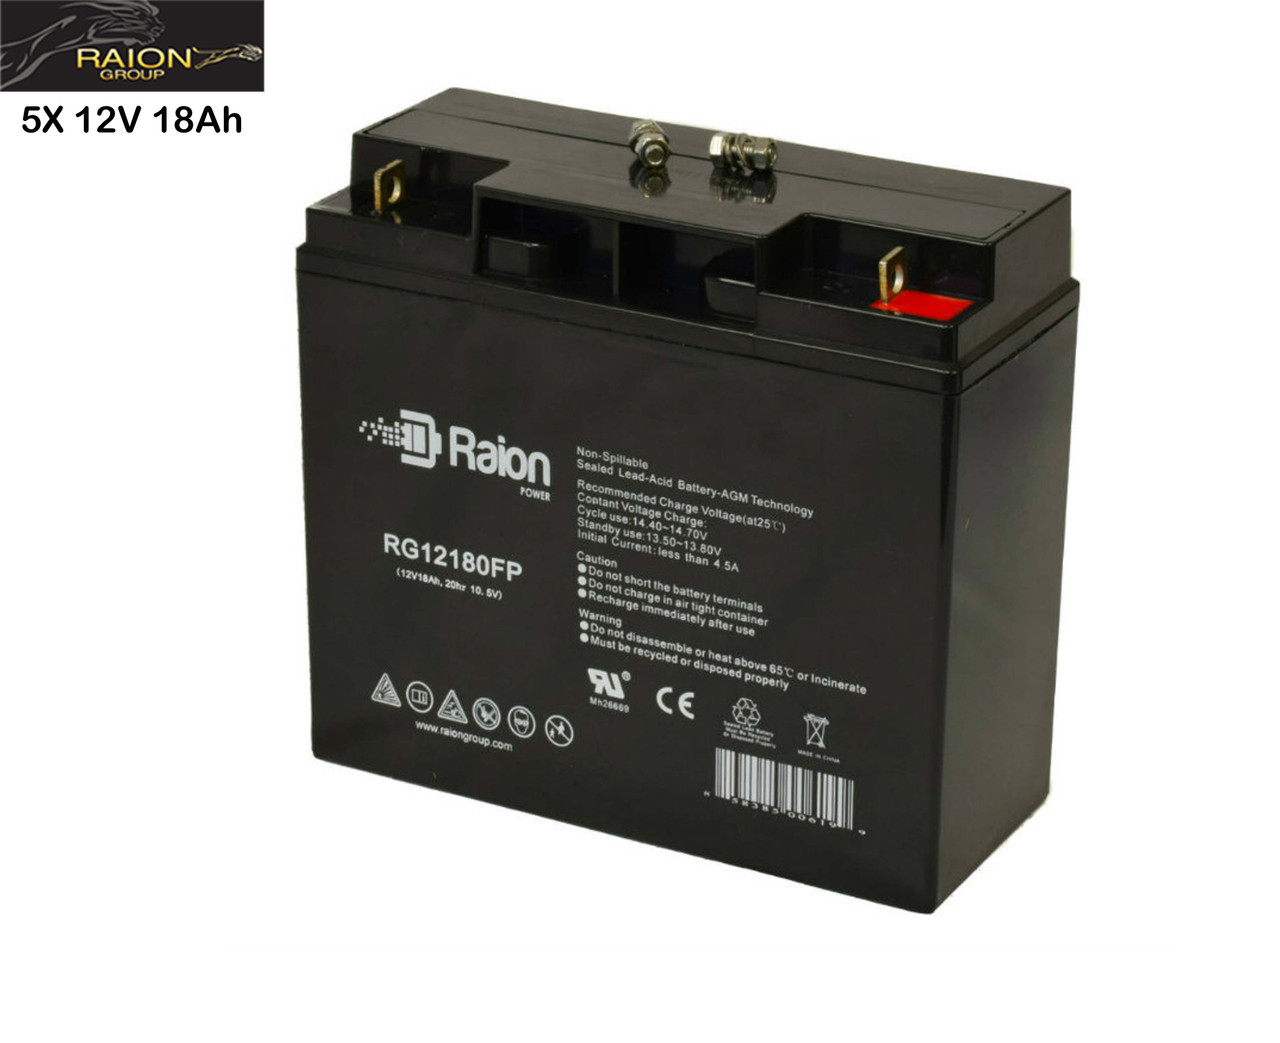 Raion Power Replacement 12V 18Ah Battery for EWheels EW-37 - 5 Pack